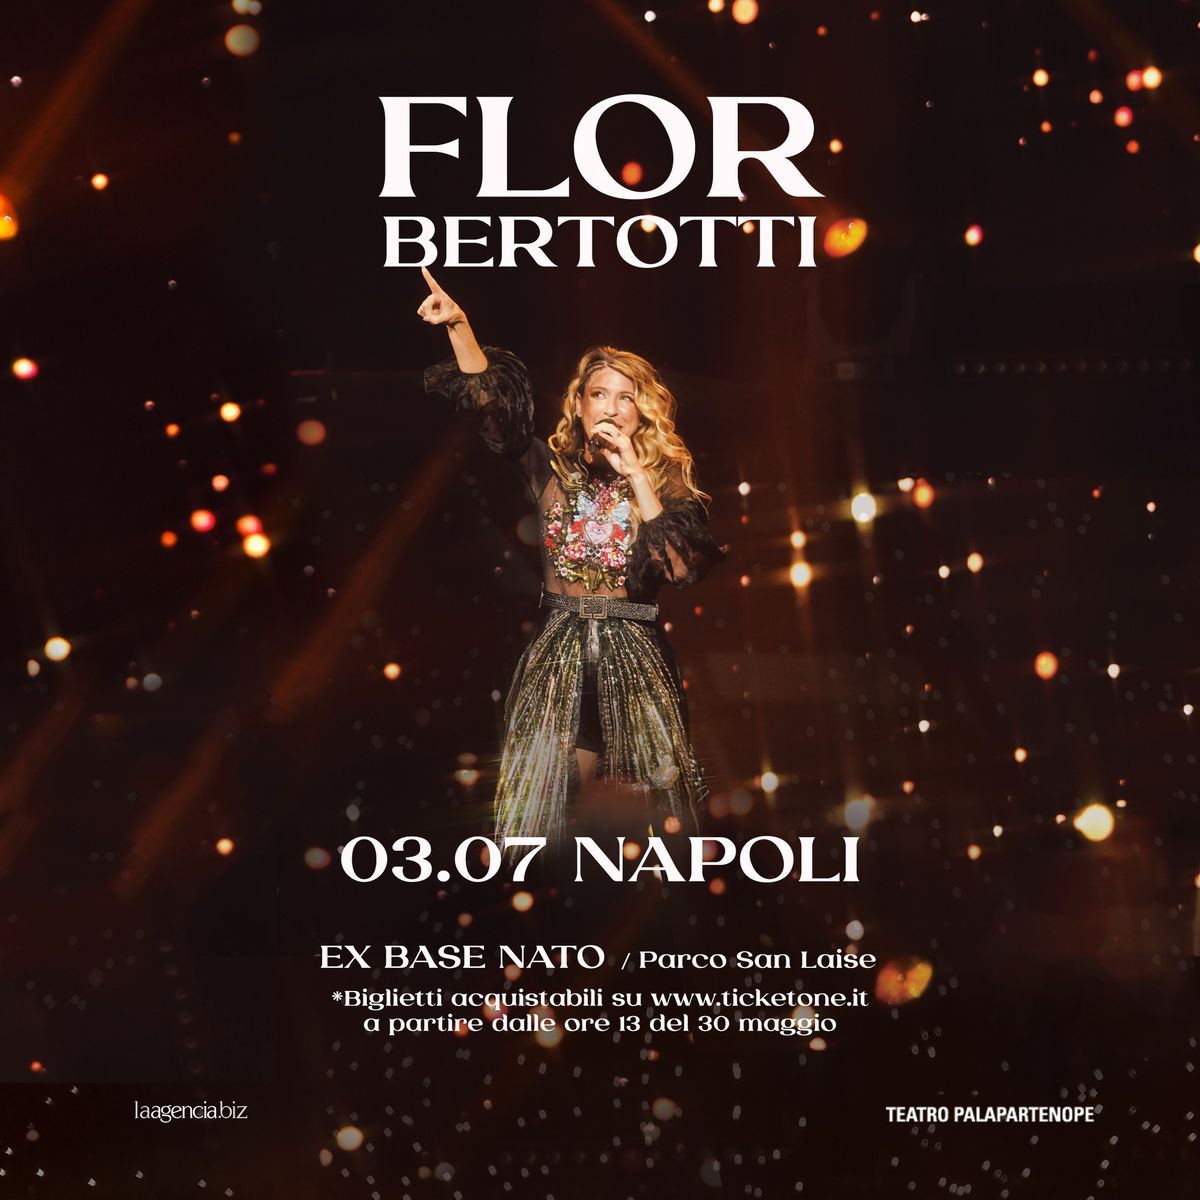 Flor Bertotti at Ex Base Nato - Napoli